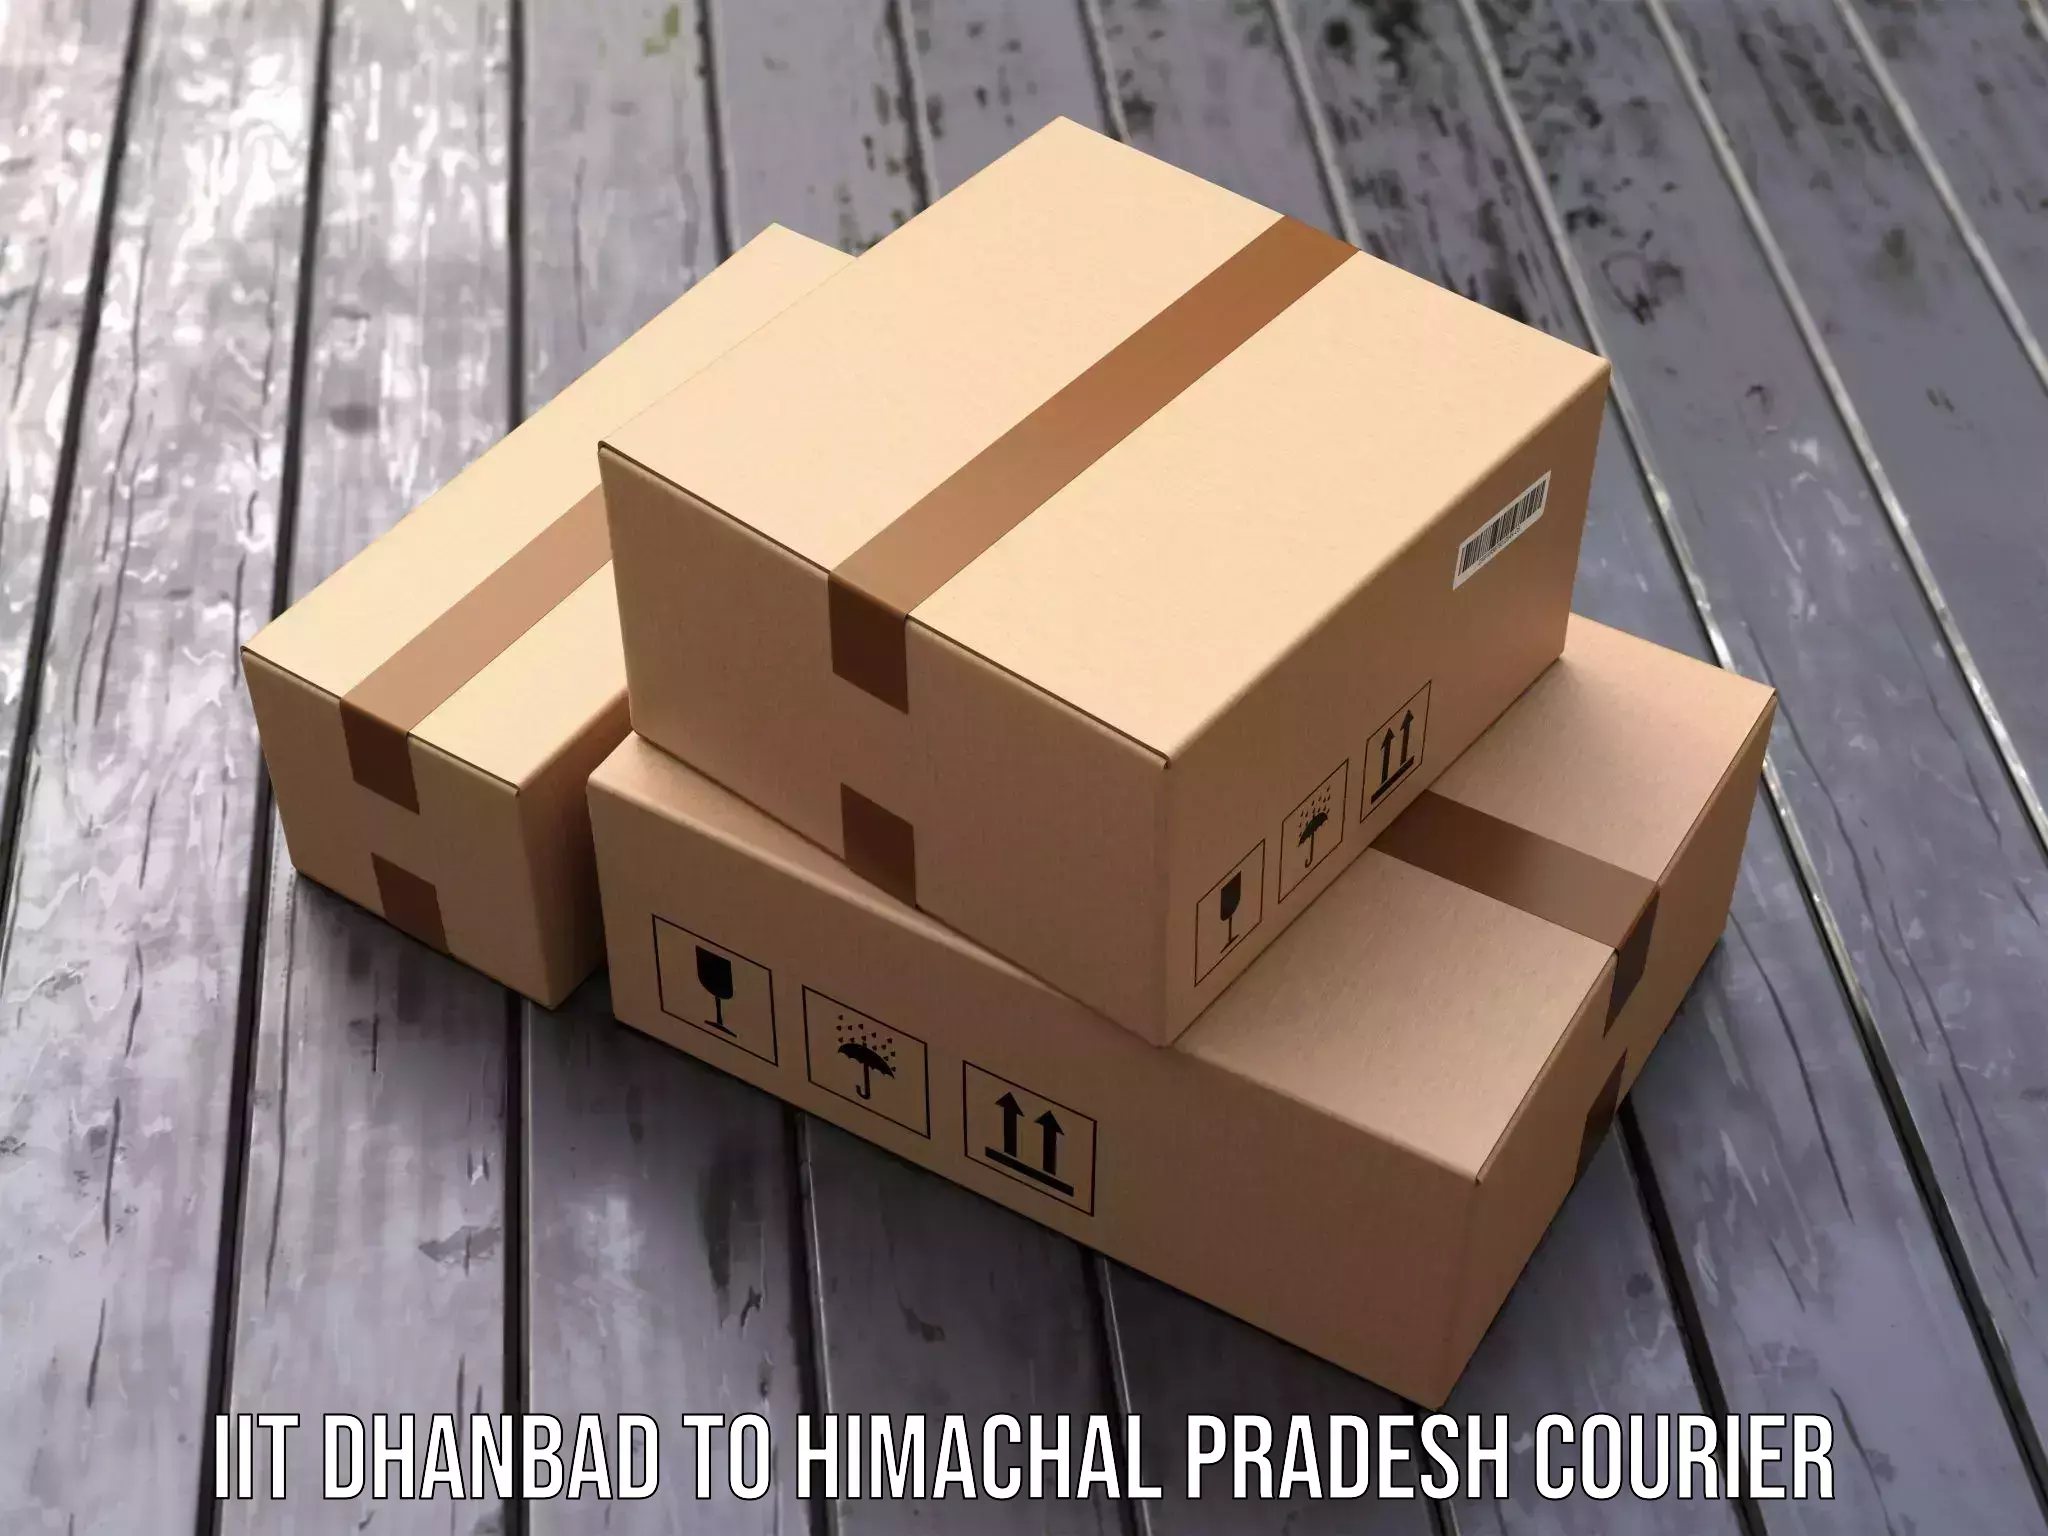 Express logistics service IIT Dhanbad to Himachal Pradesh